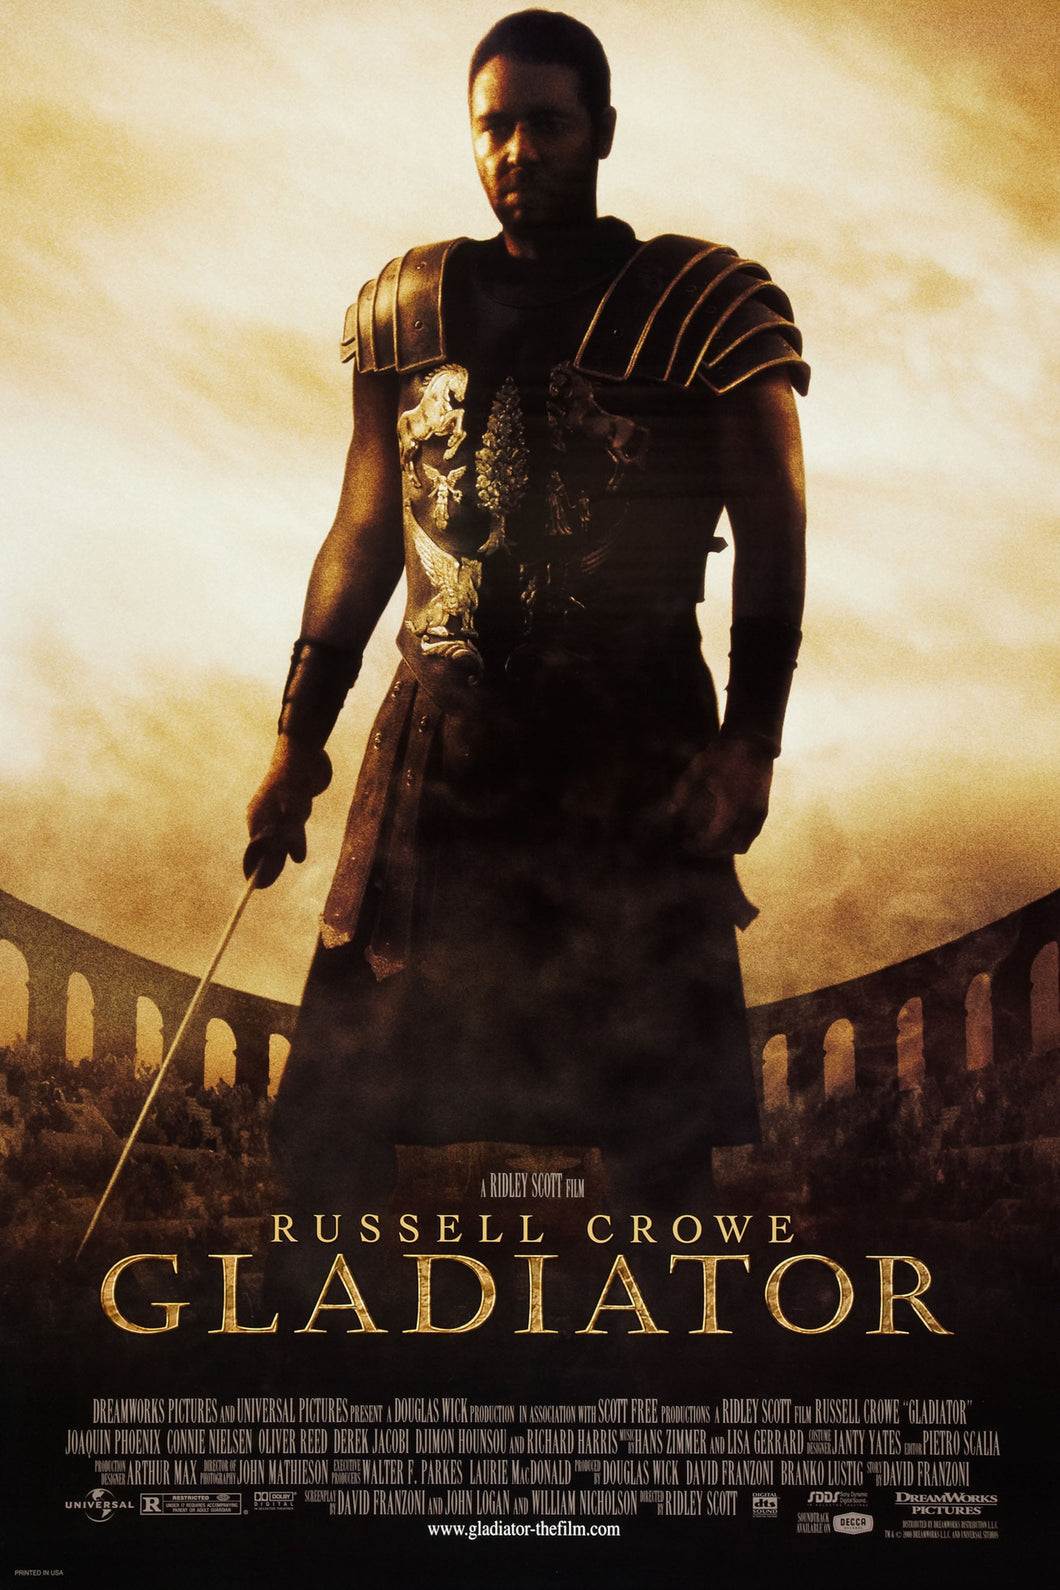 Gladiator (2000) Movie Poster Framed or Unframed Glossy Poster Free UK Shipping!!!